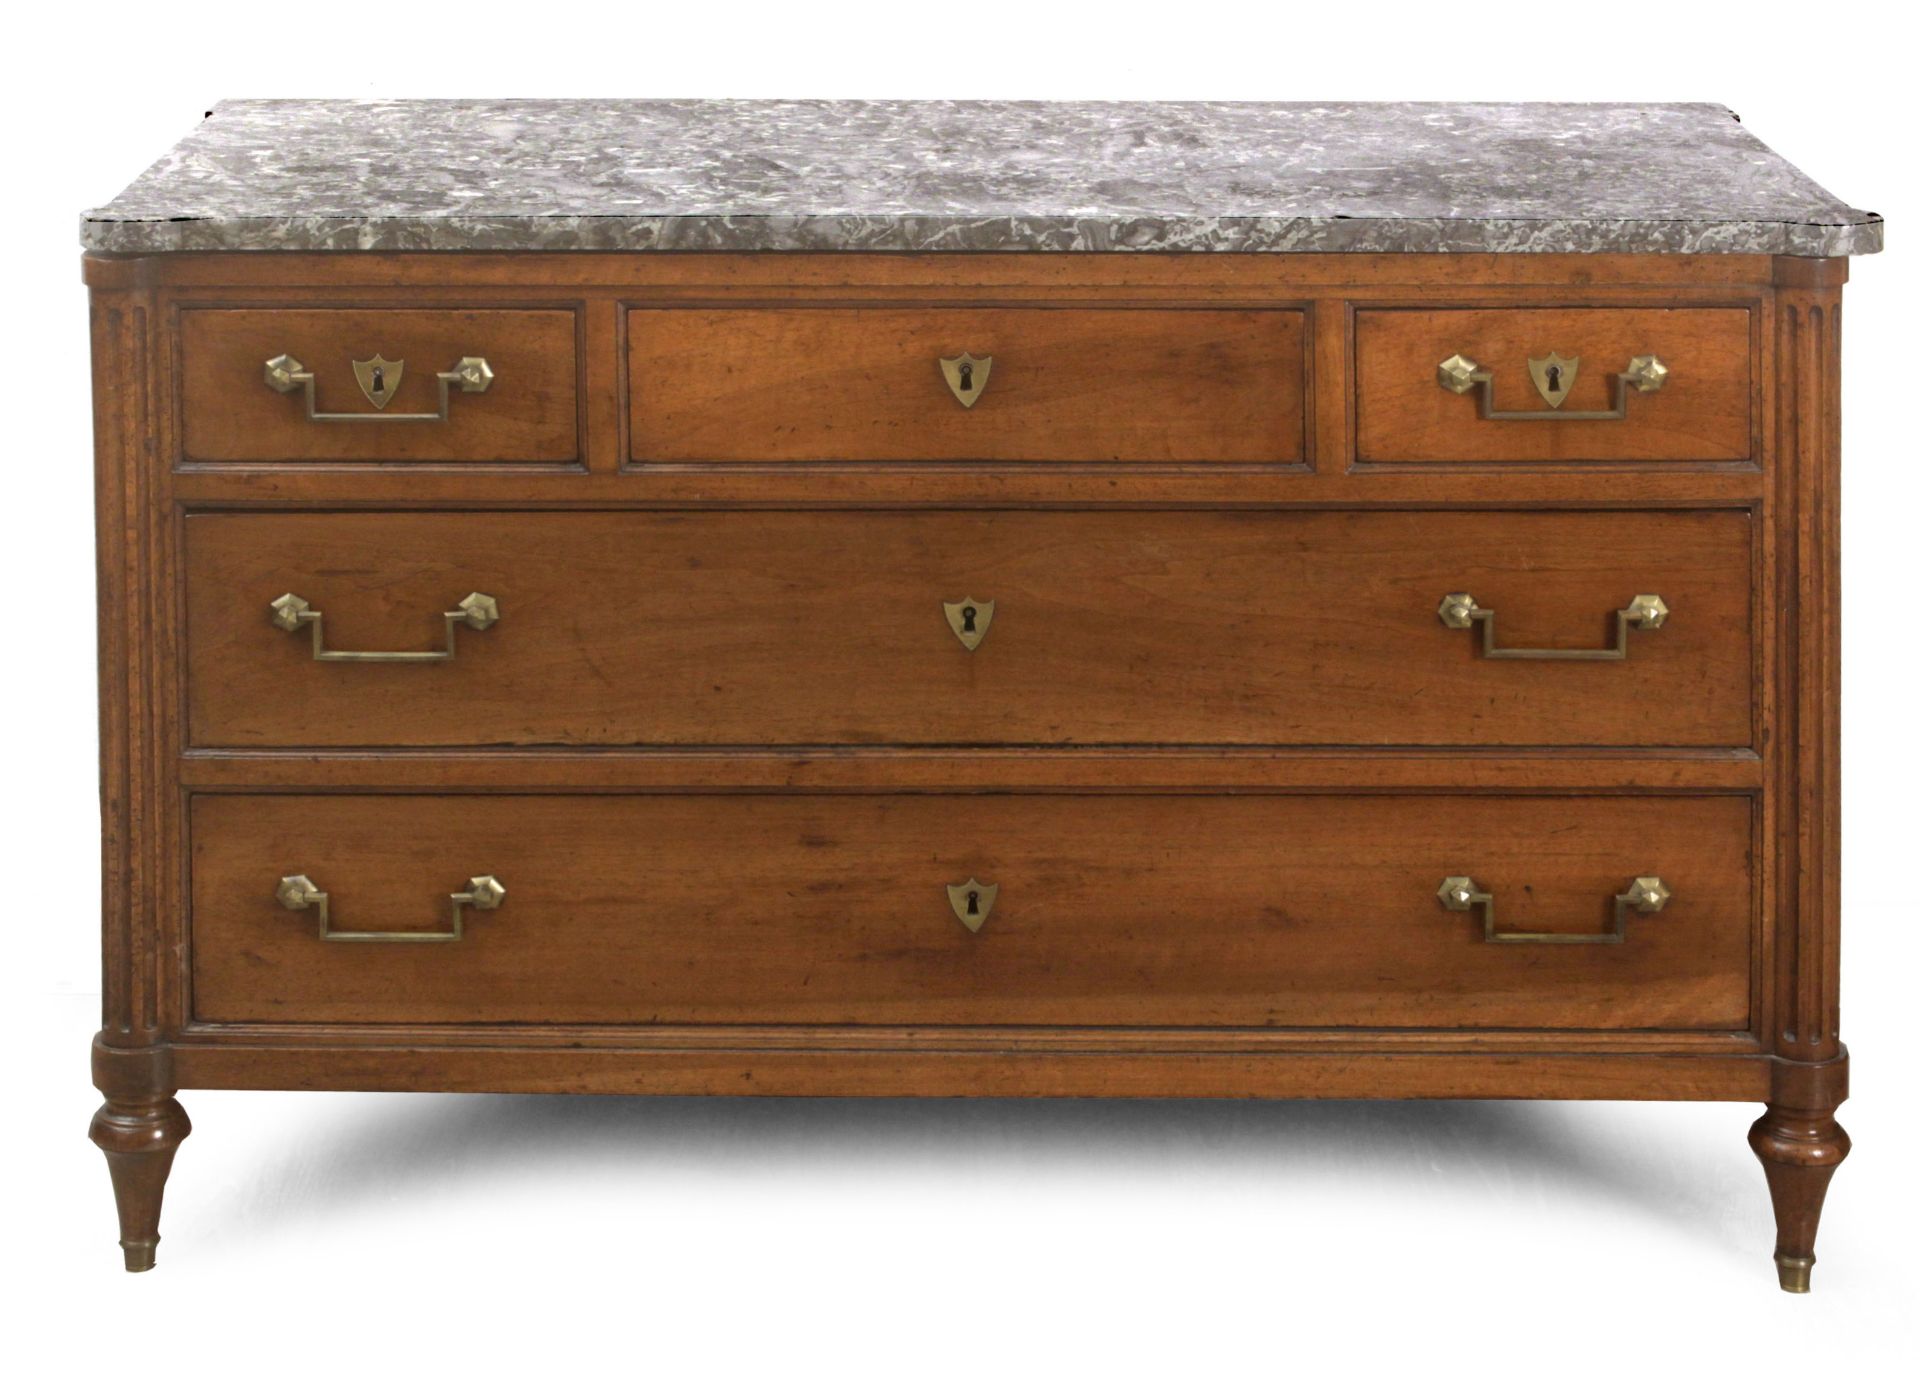 Las quarter of 18th century Louis XVI walnut chest of drawers